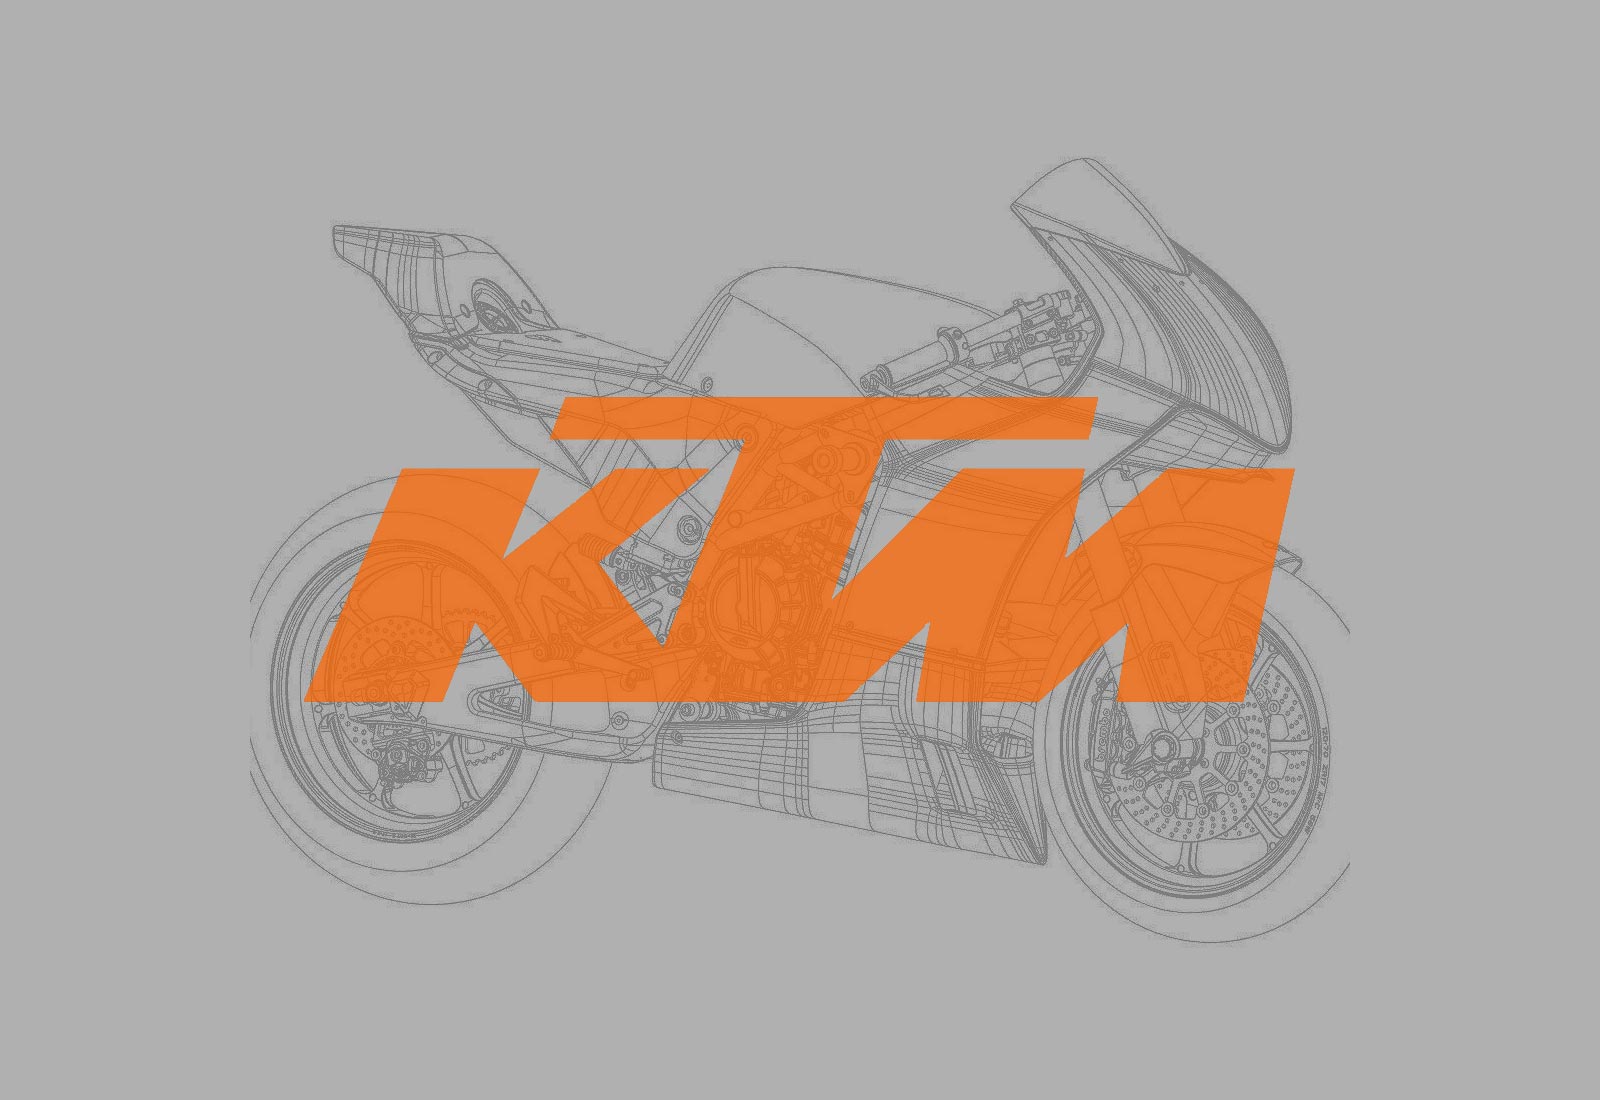 KTM Begins Teasing Limited Edition 890cc “Moto2” Bike